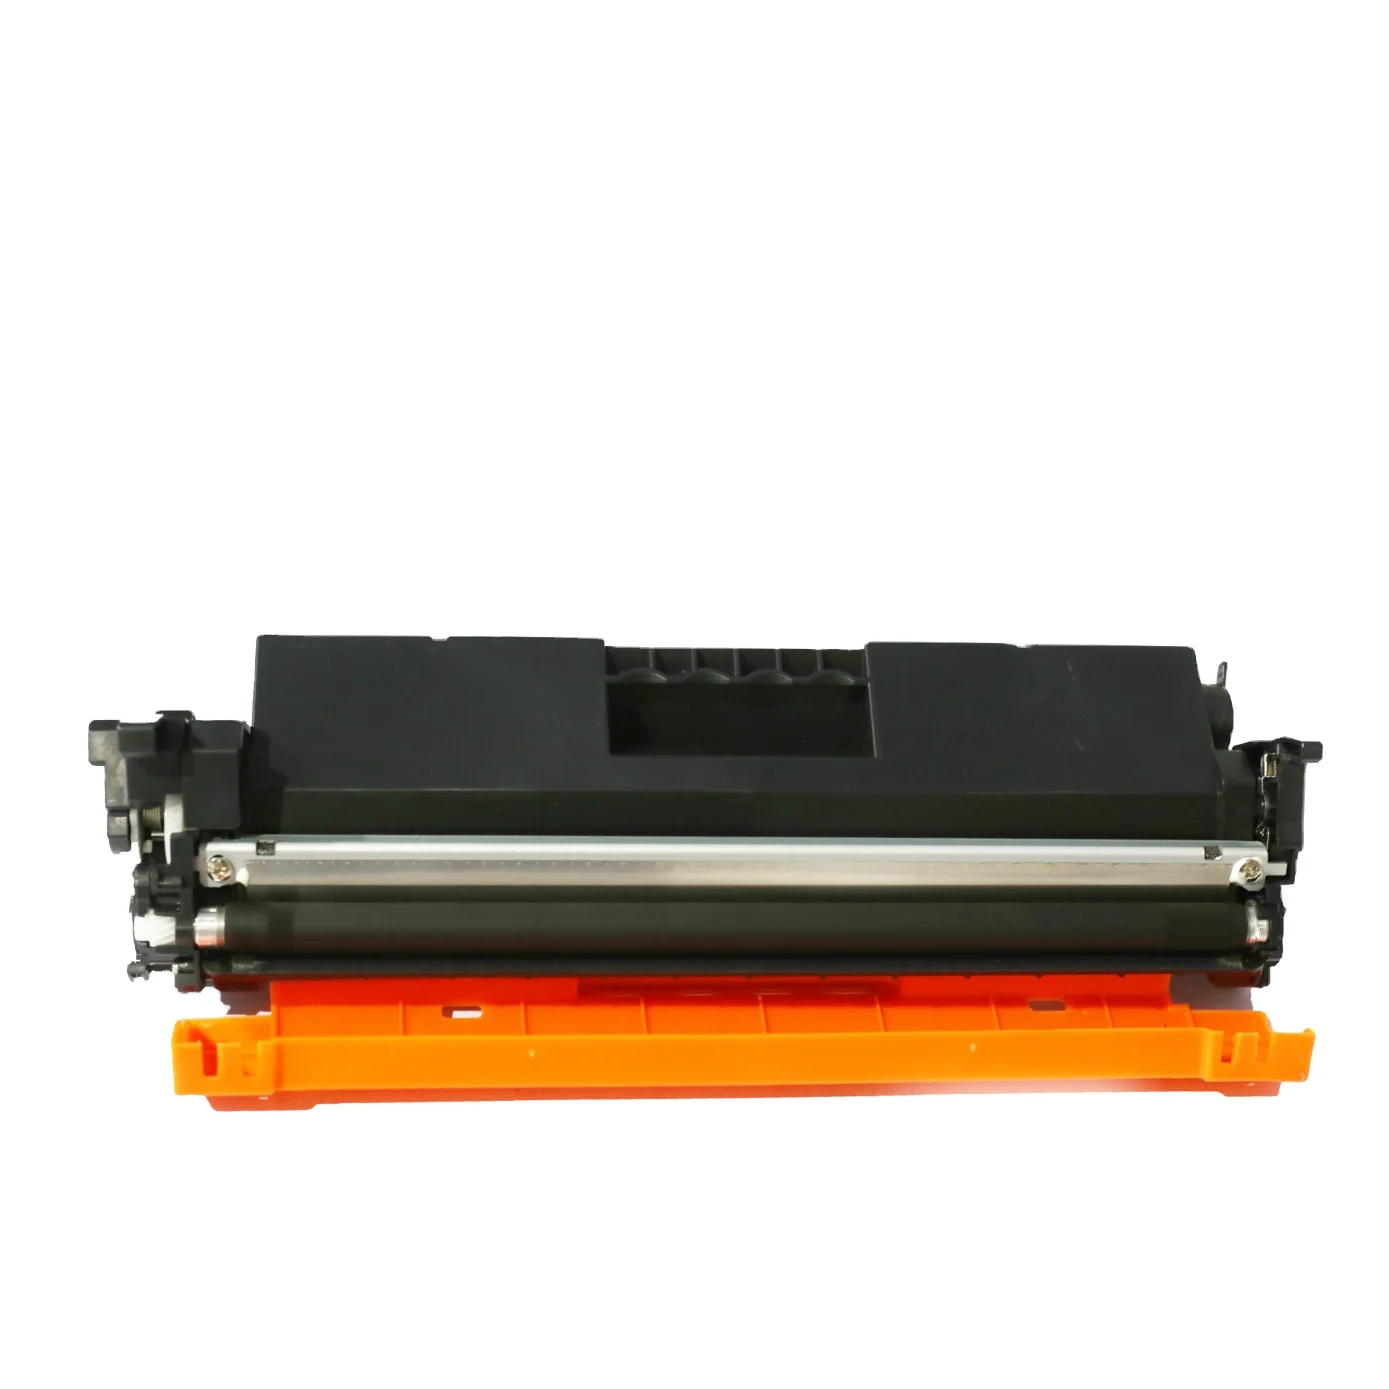 Squeak stream Musty Heshun Premium Refill Cf217a Cf217 17a Black Toner Cartridge Compatible For  M102a M102w Mfp Printer - Buy Toner Cartridge For Hp Laserjet Pro  M102a/m102w/m130a/fn/fw/nw,Compatible Toner Cartridge For Hp Laserjet Pro  M102a/m102w/m130a/fn/fw/nw,Hp Laserjet